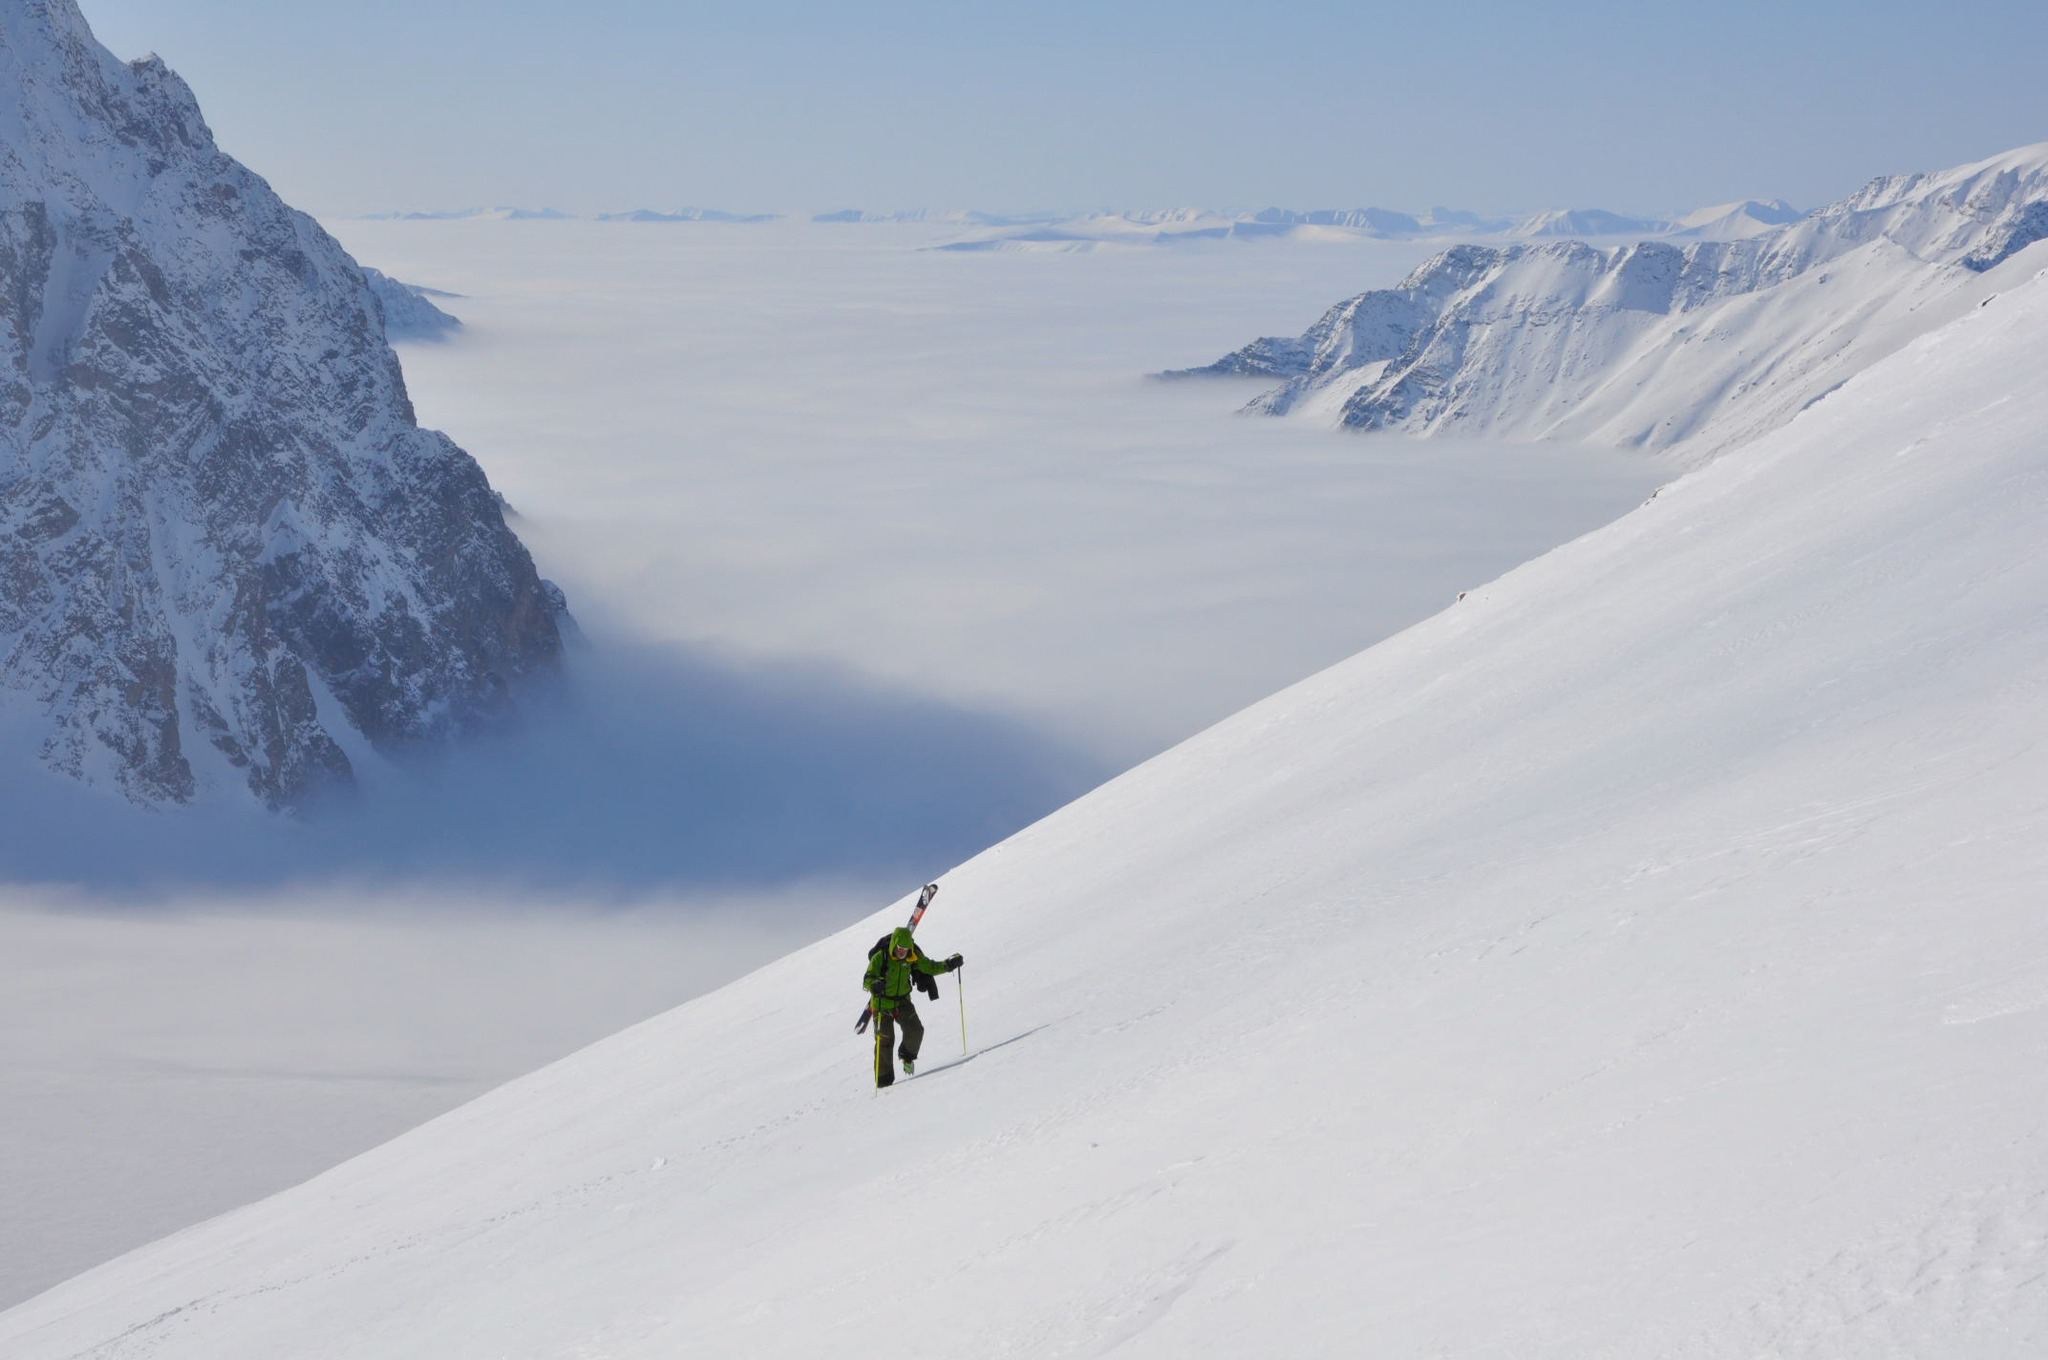 Mission: 6 giorni di skialp & Splitboard alle Svalbard